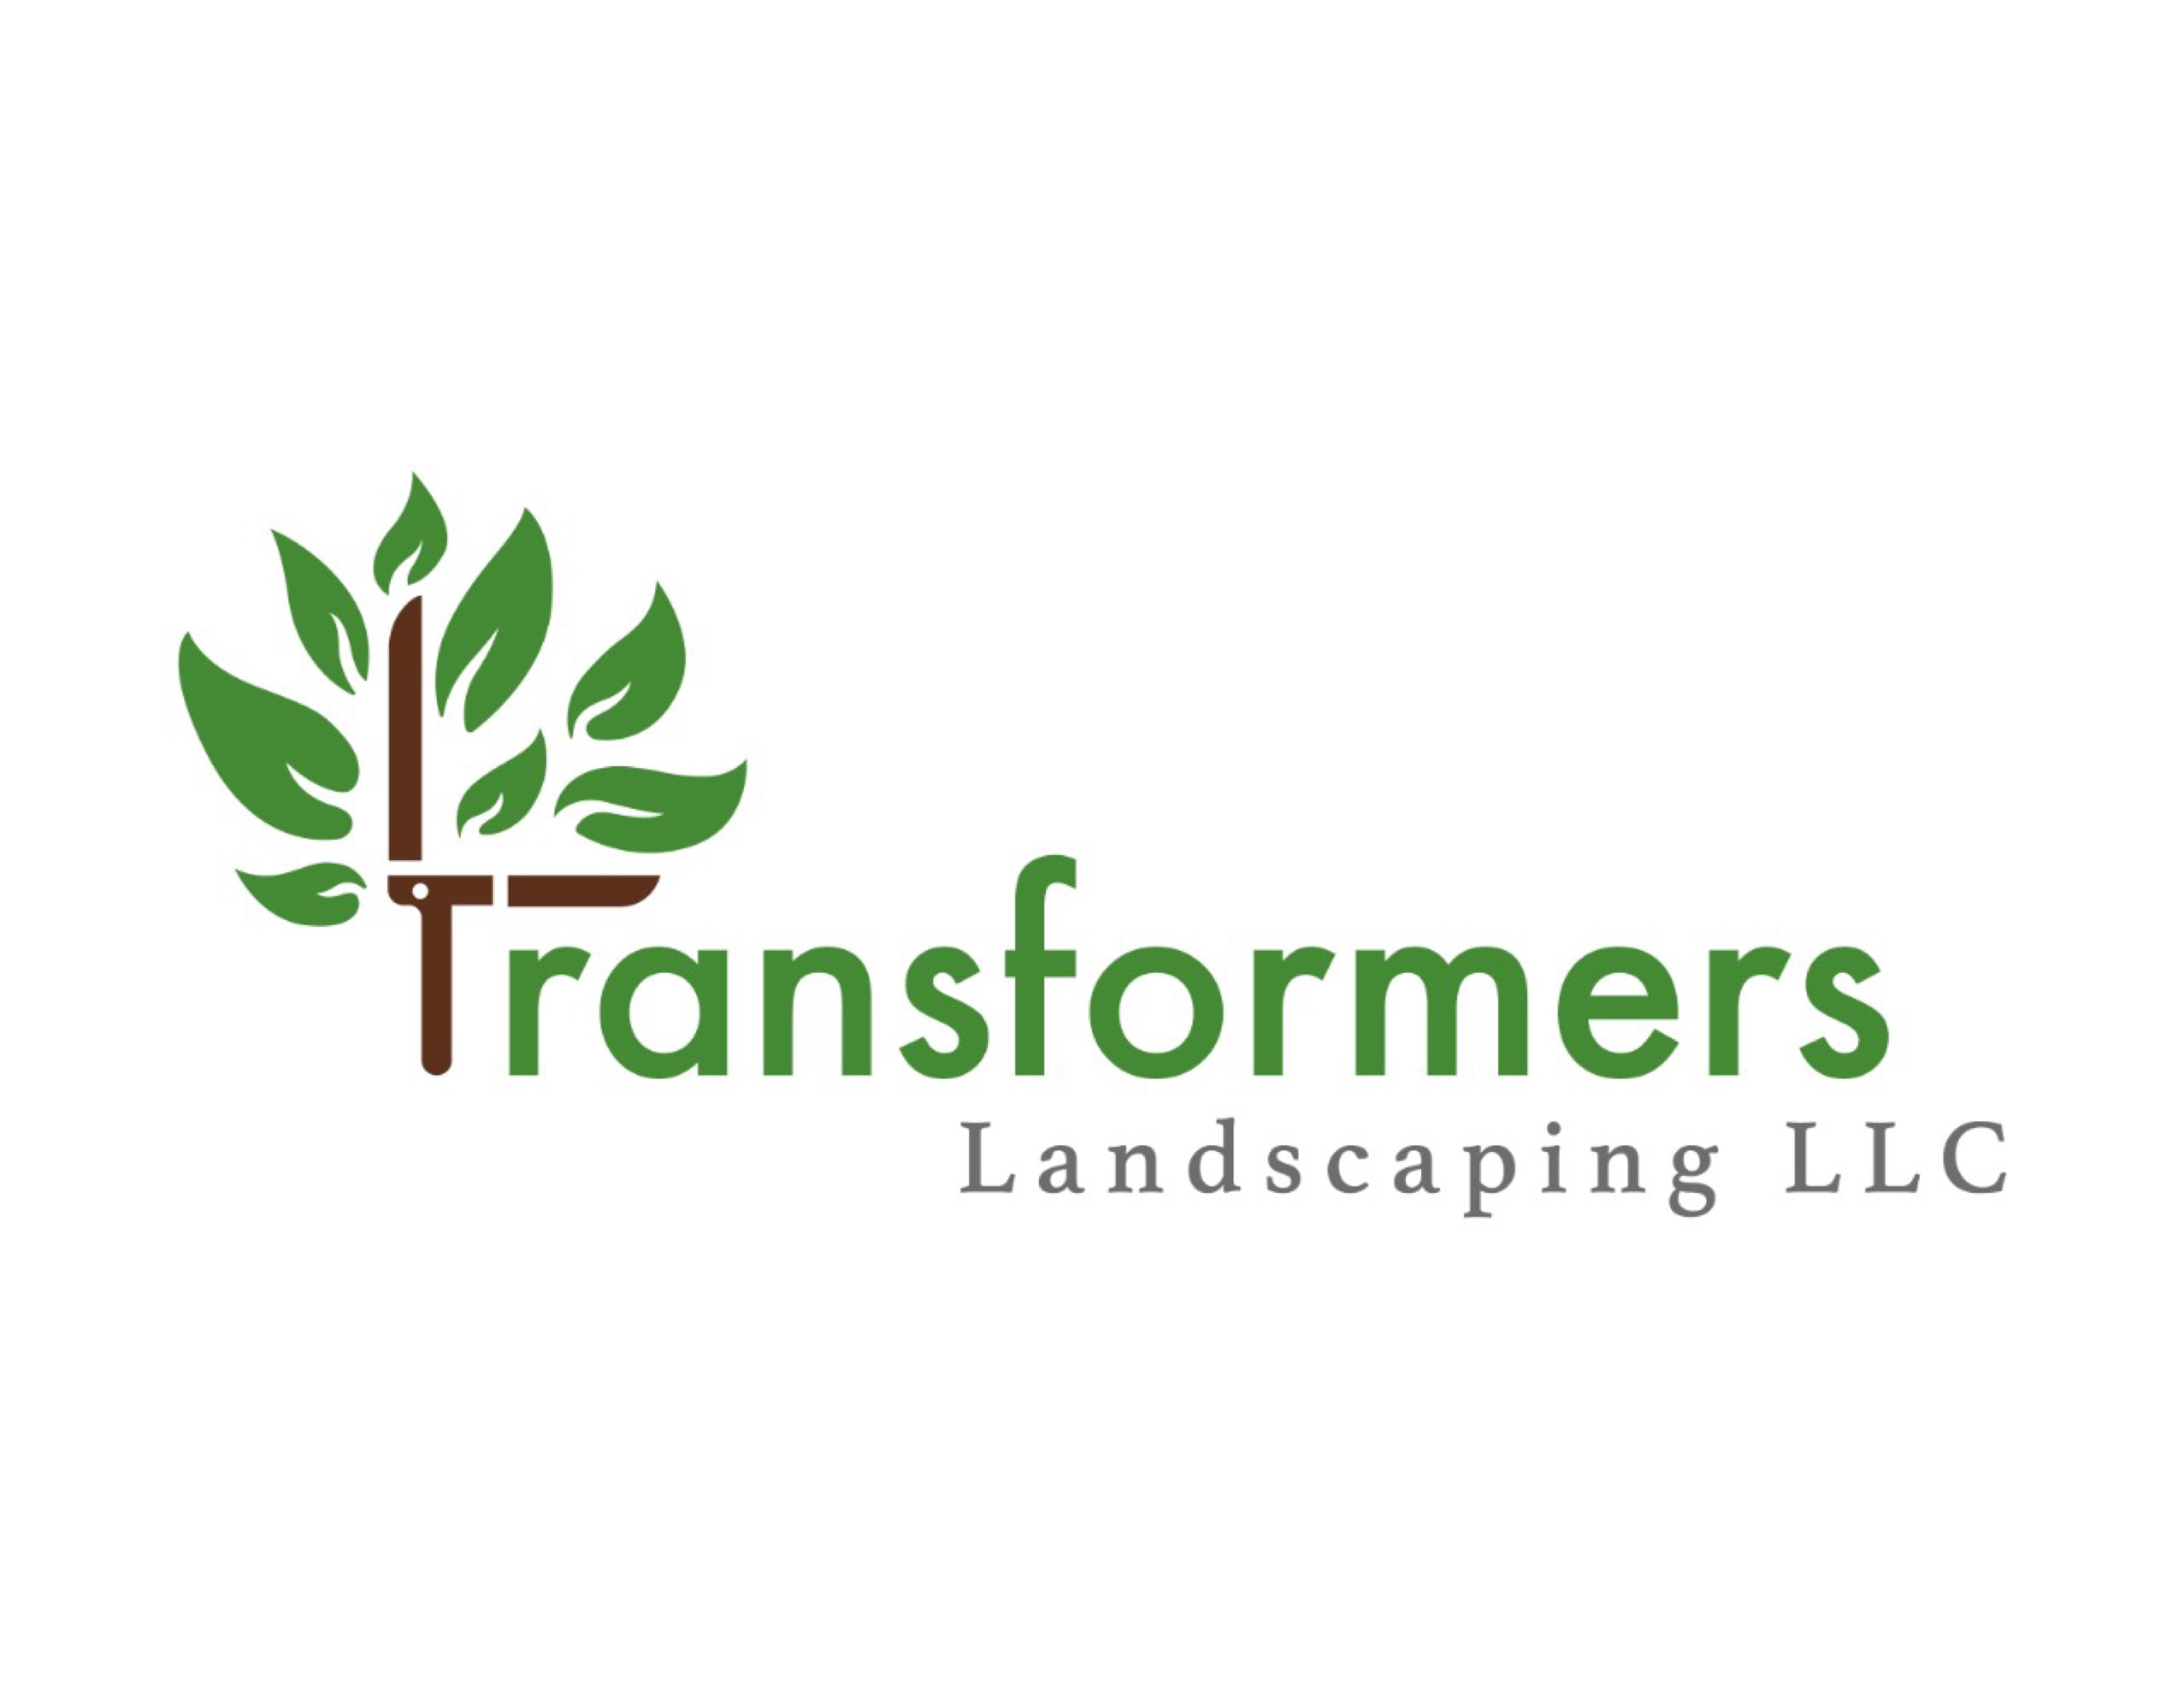 Transformers Landscaping, LLc Logo